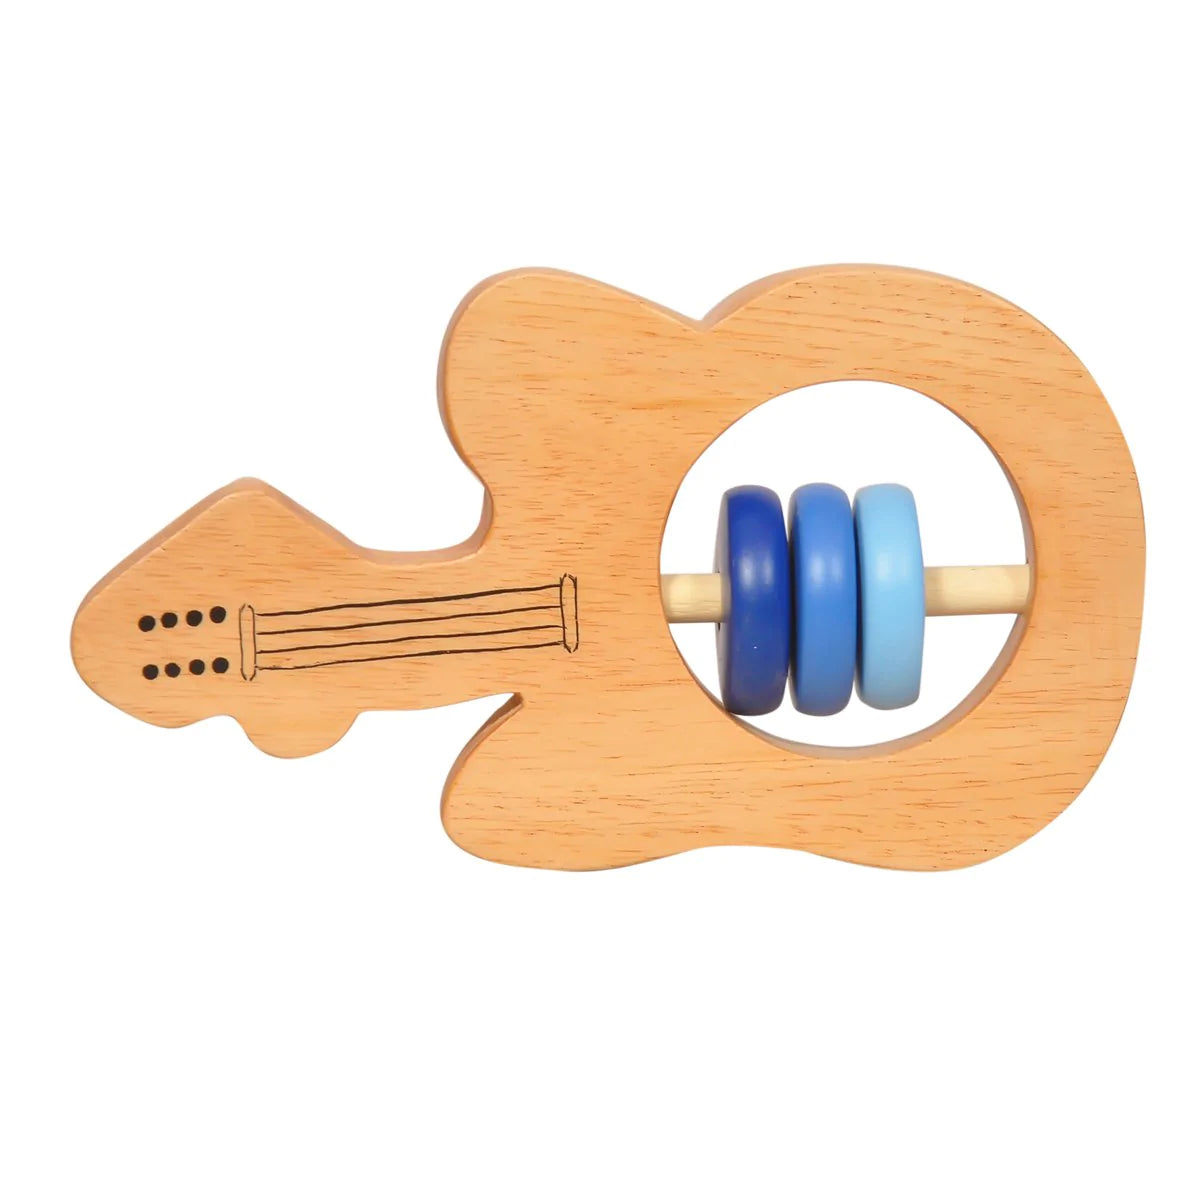 Buy Thasvi Wooden Guitar Rattle Toy - SkilloToys.com